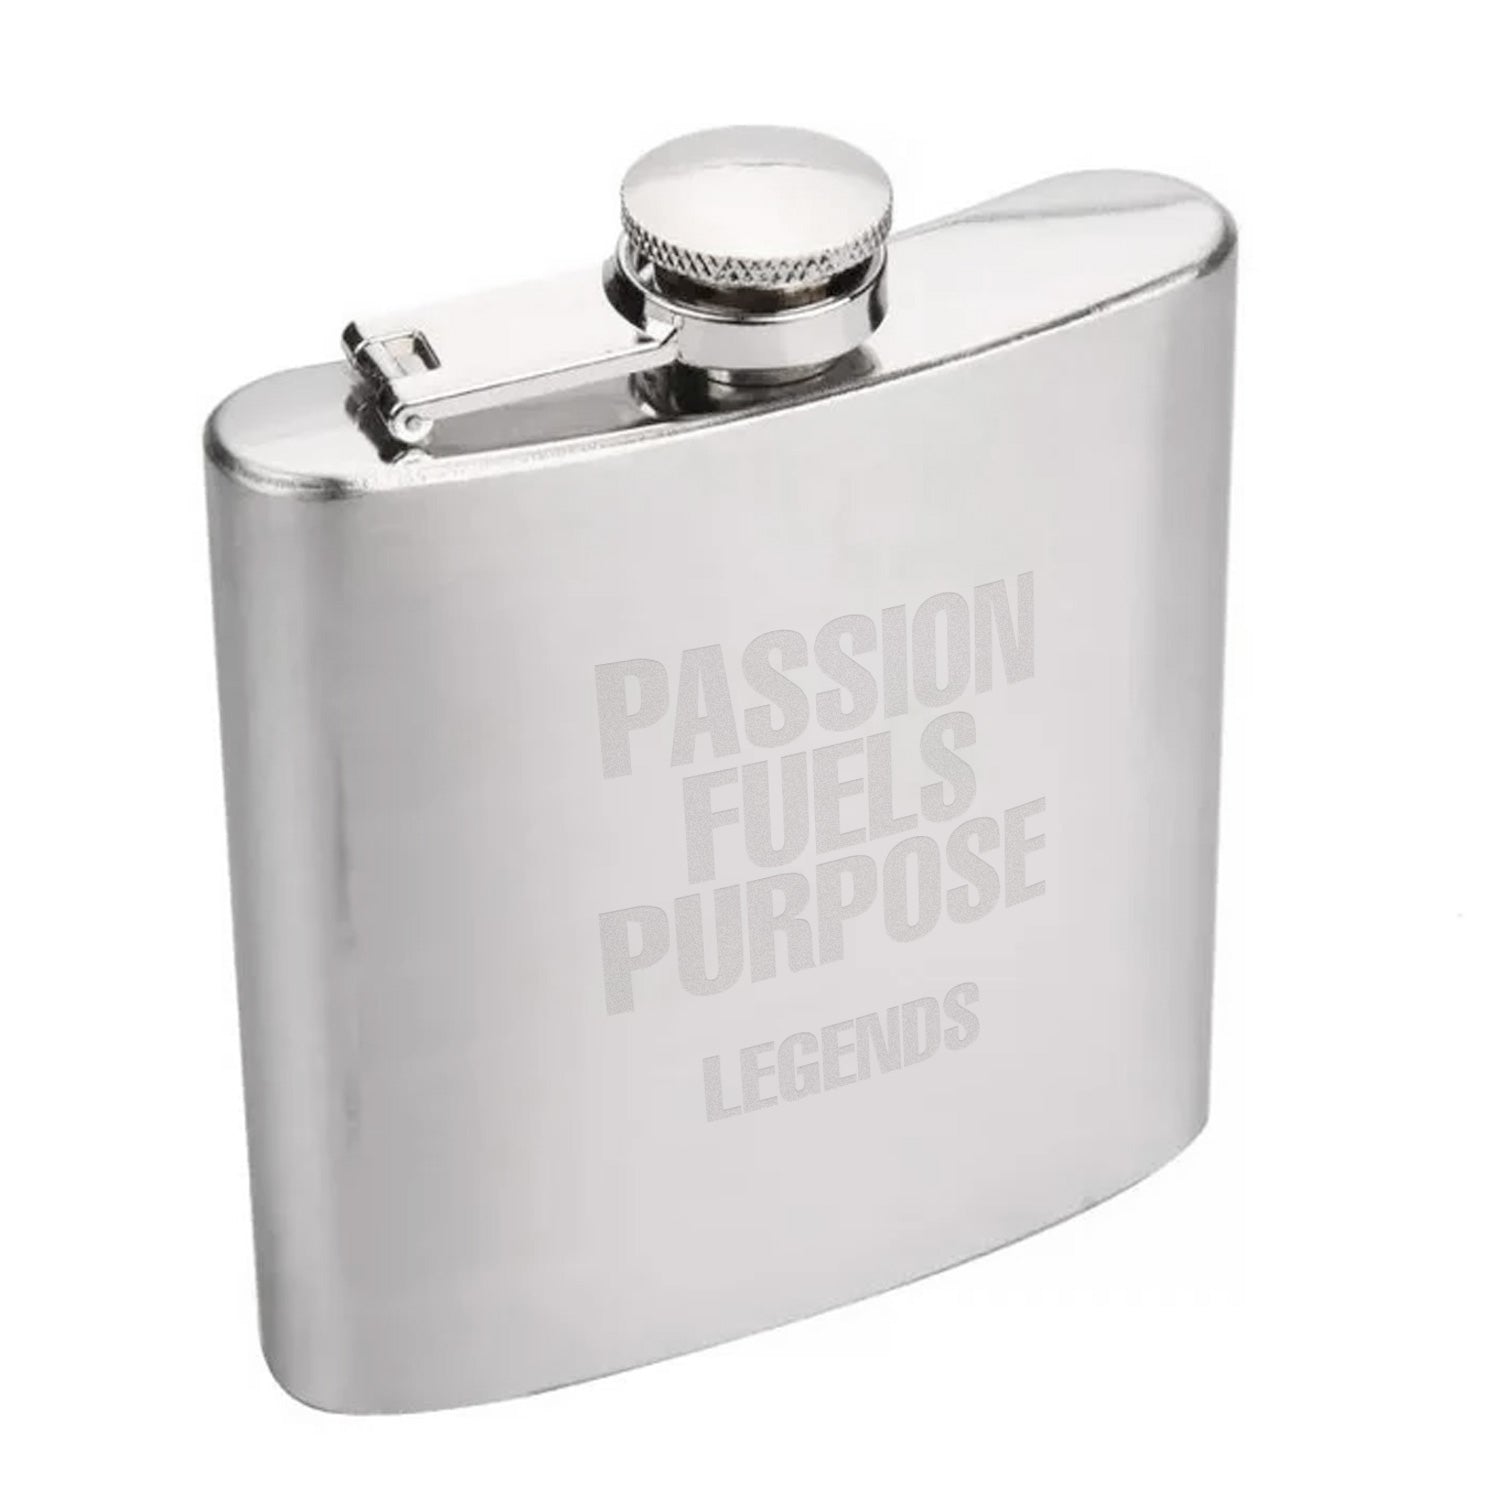 Flask - Silver Passion Fuels Purpose